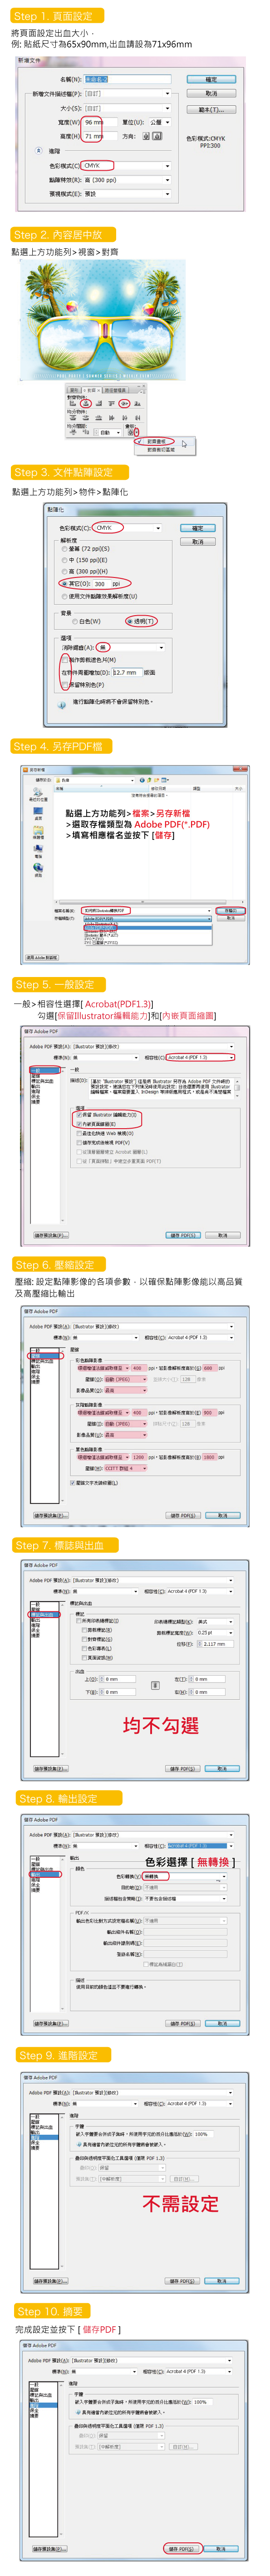 llustrator轉換PDF轉檔教學_.jpg